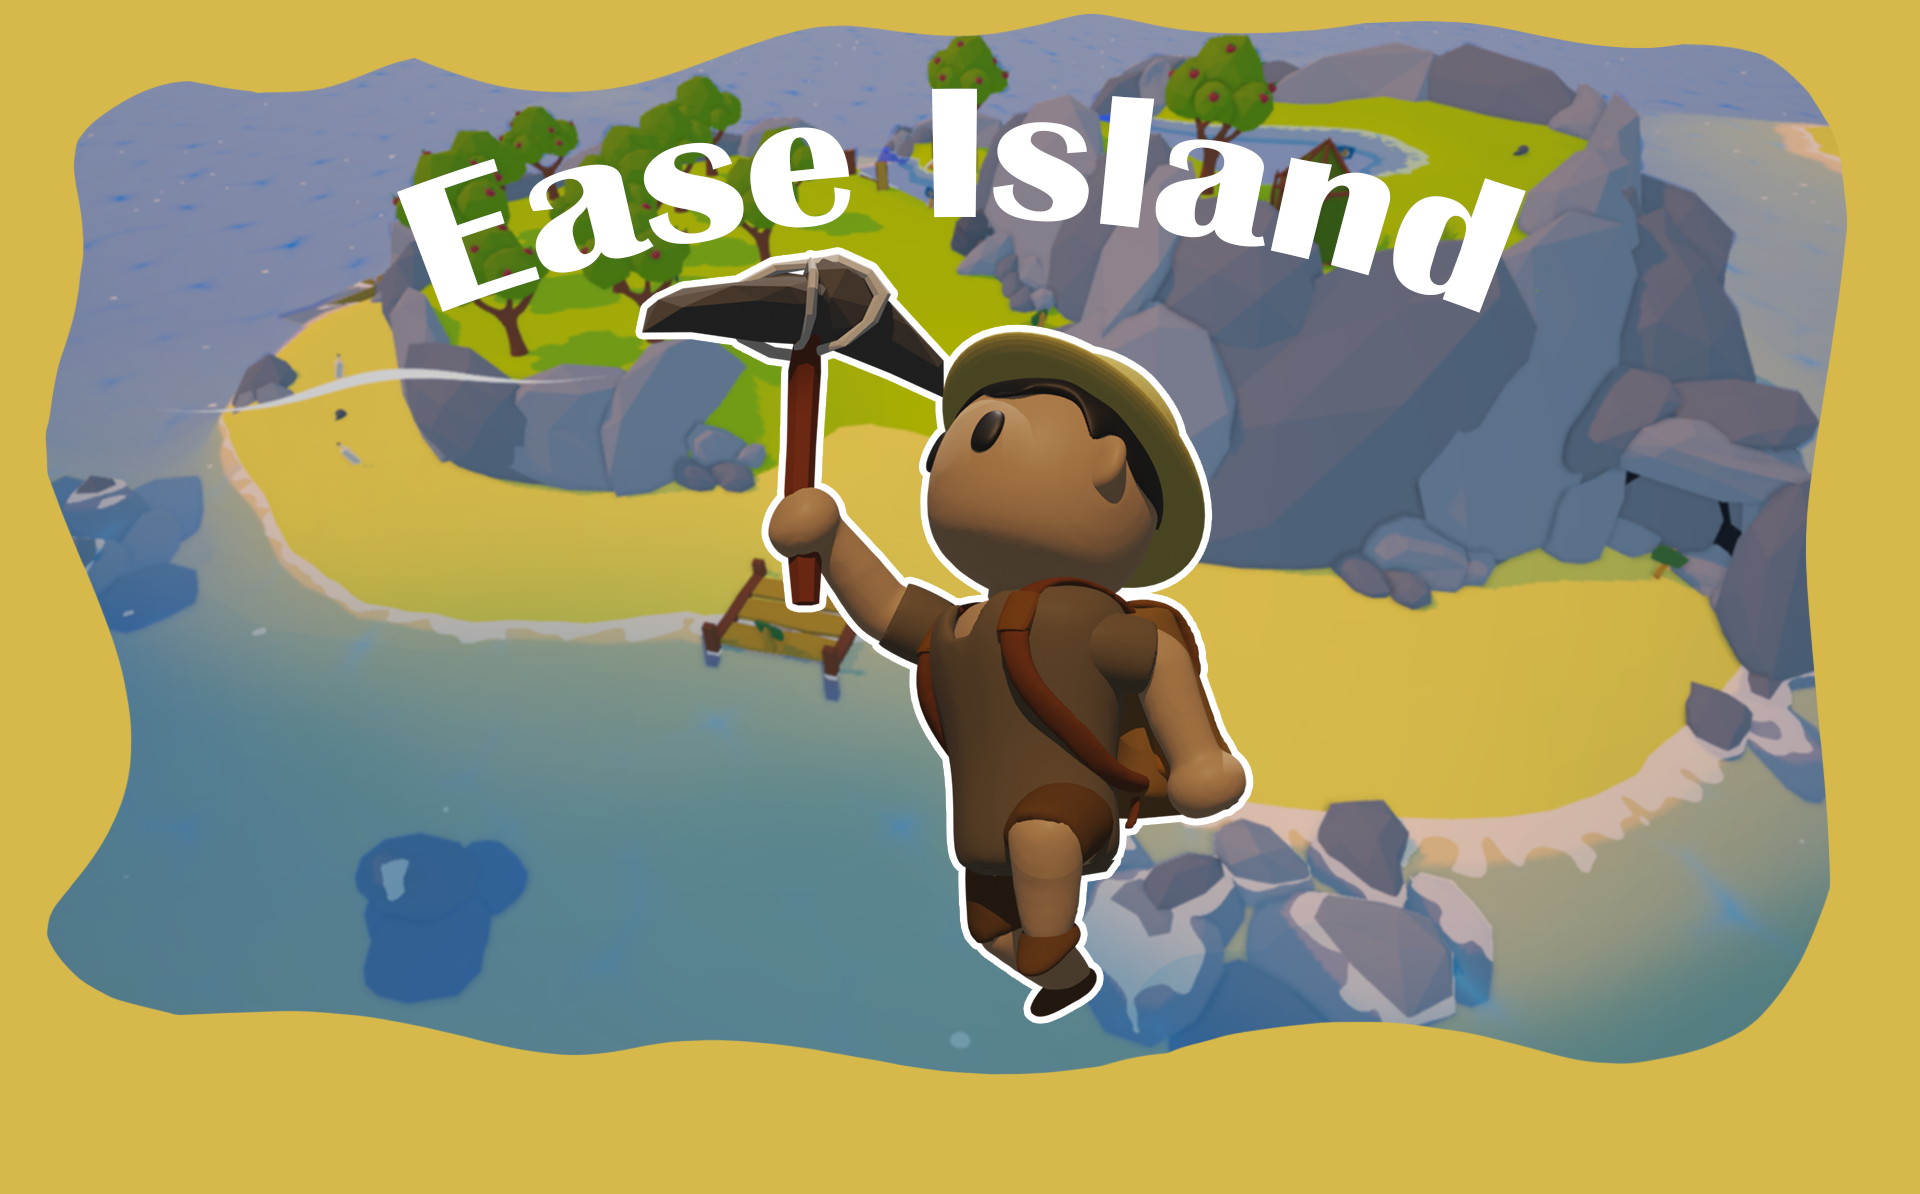 Ease Island